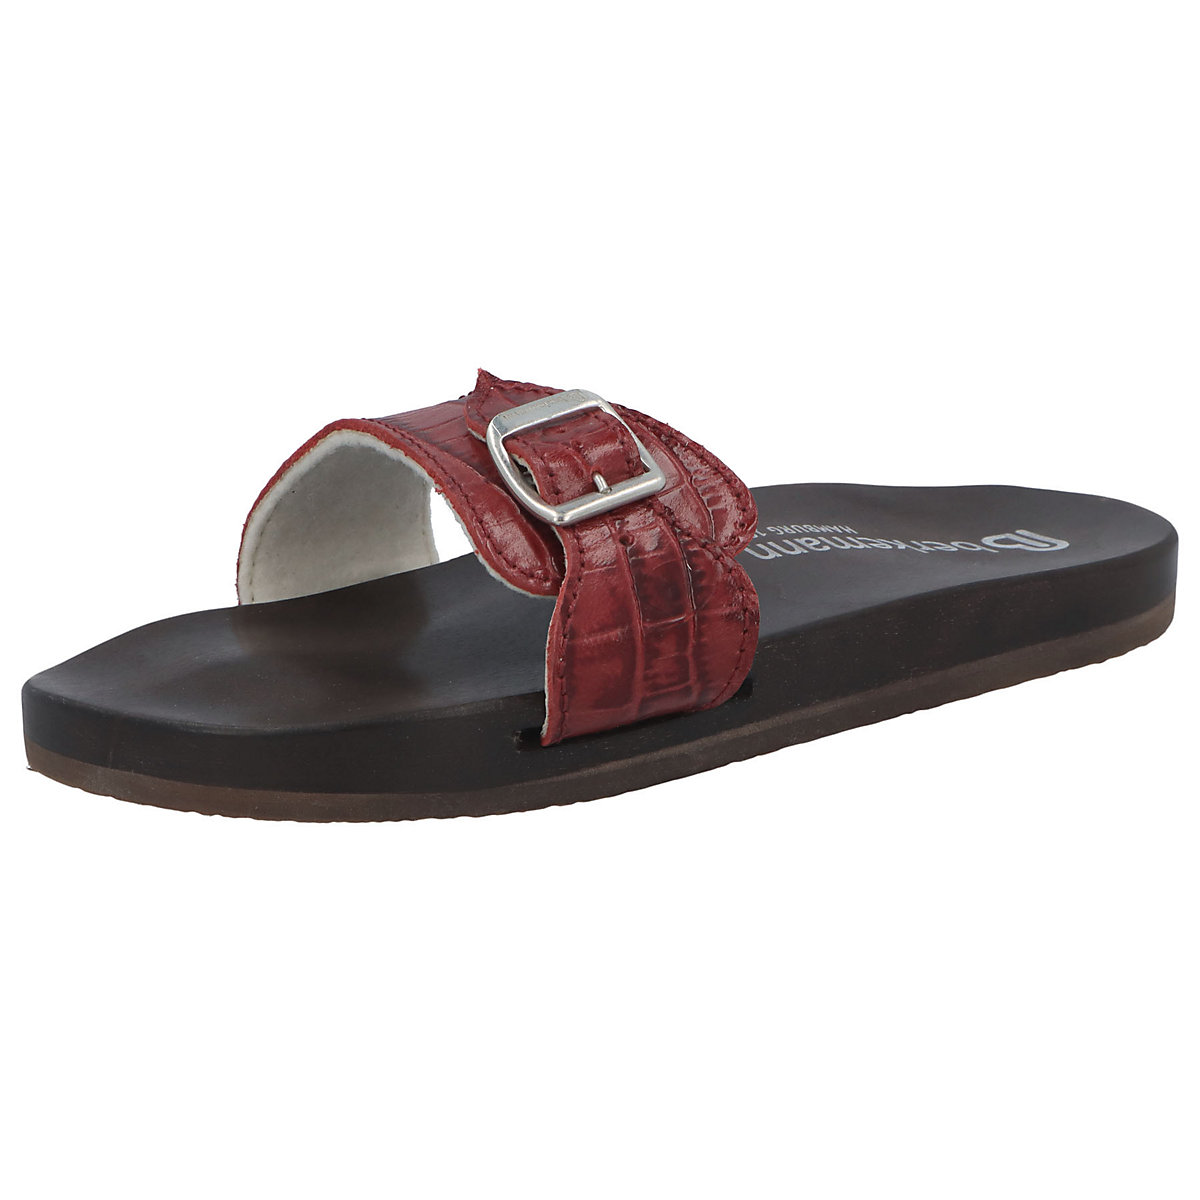 berkemann Original Sandale Klassische Sandalen rot